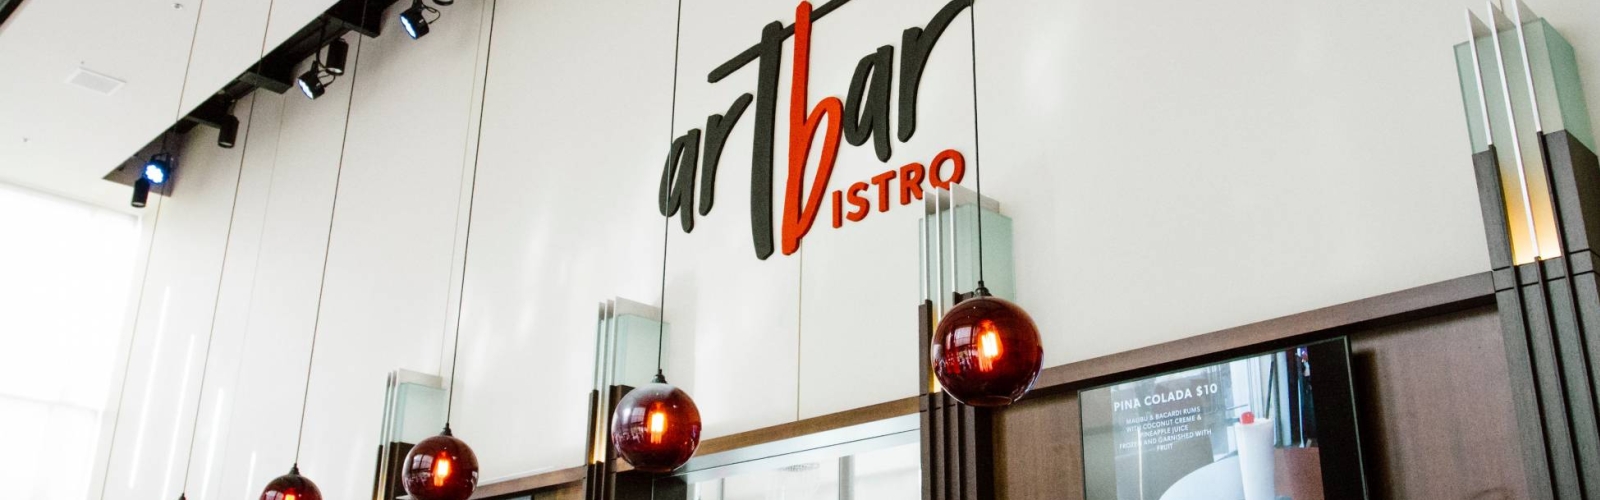 ArtBar + Bistro